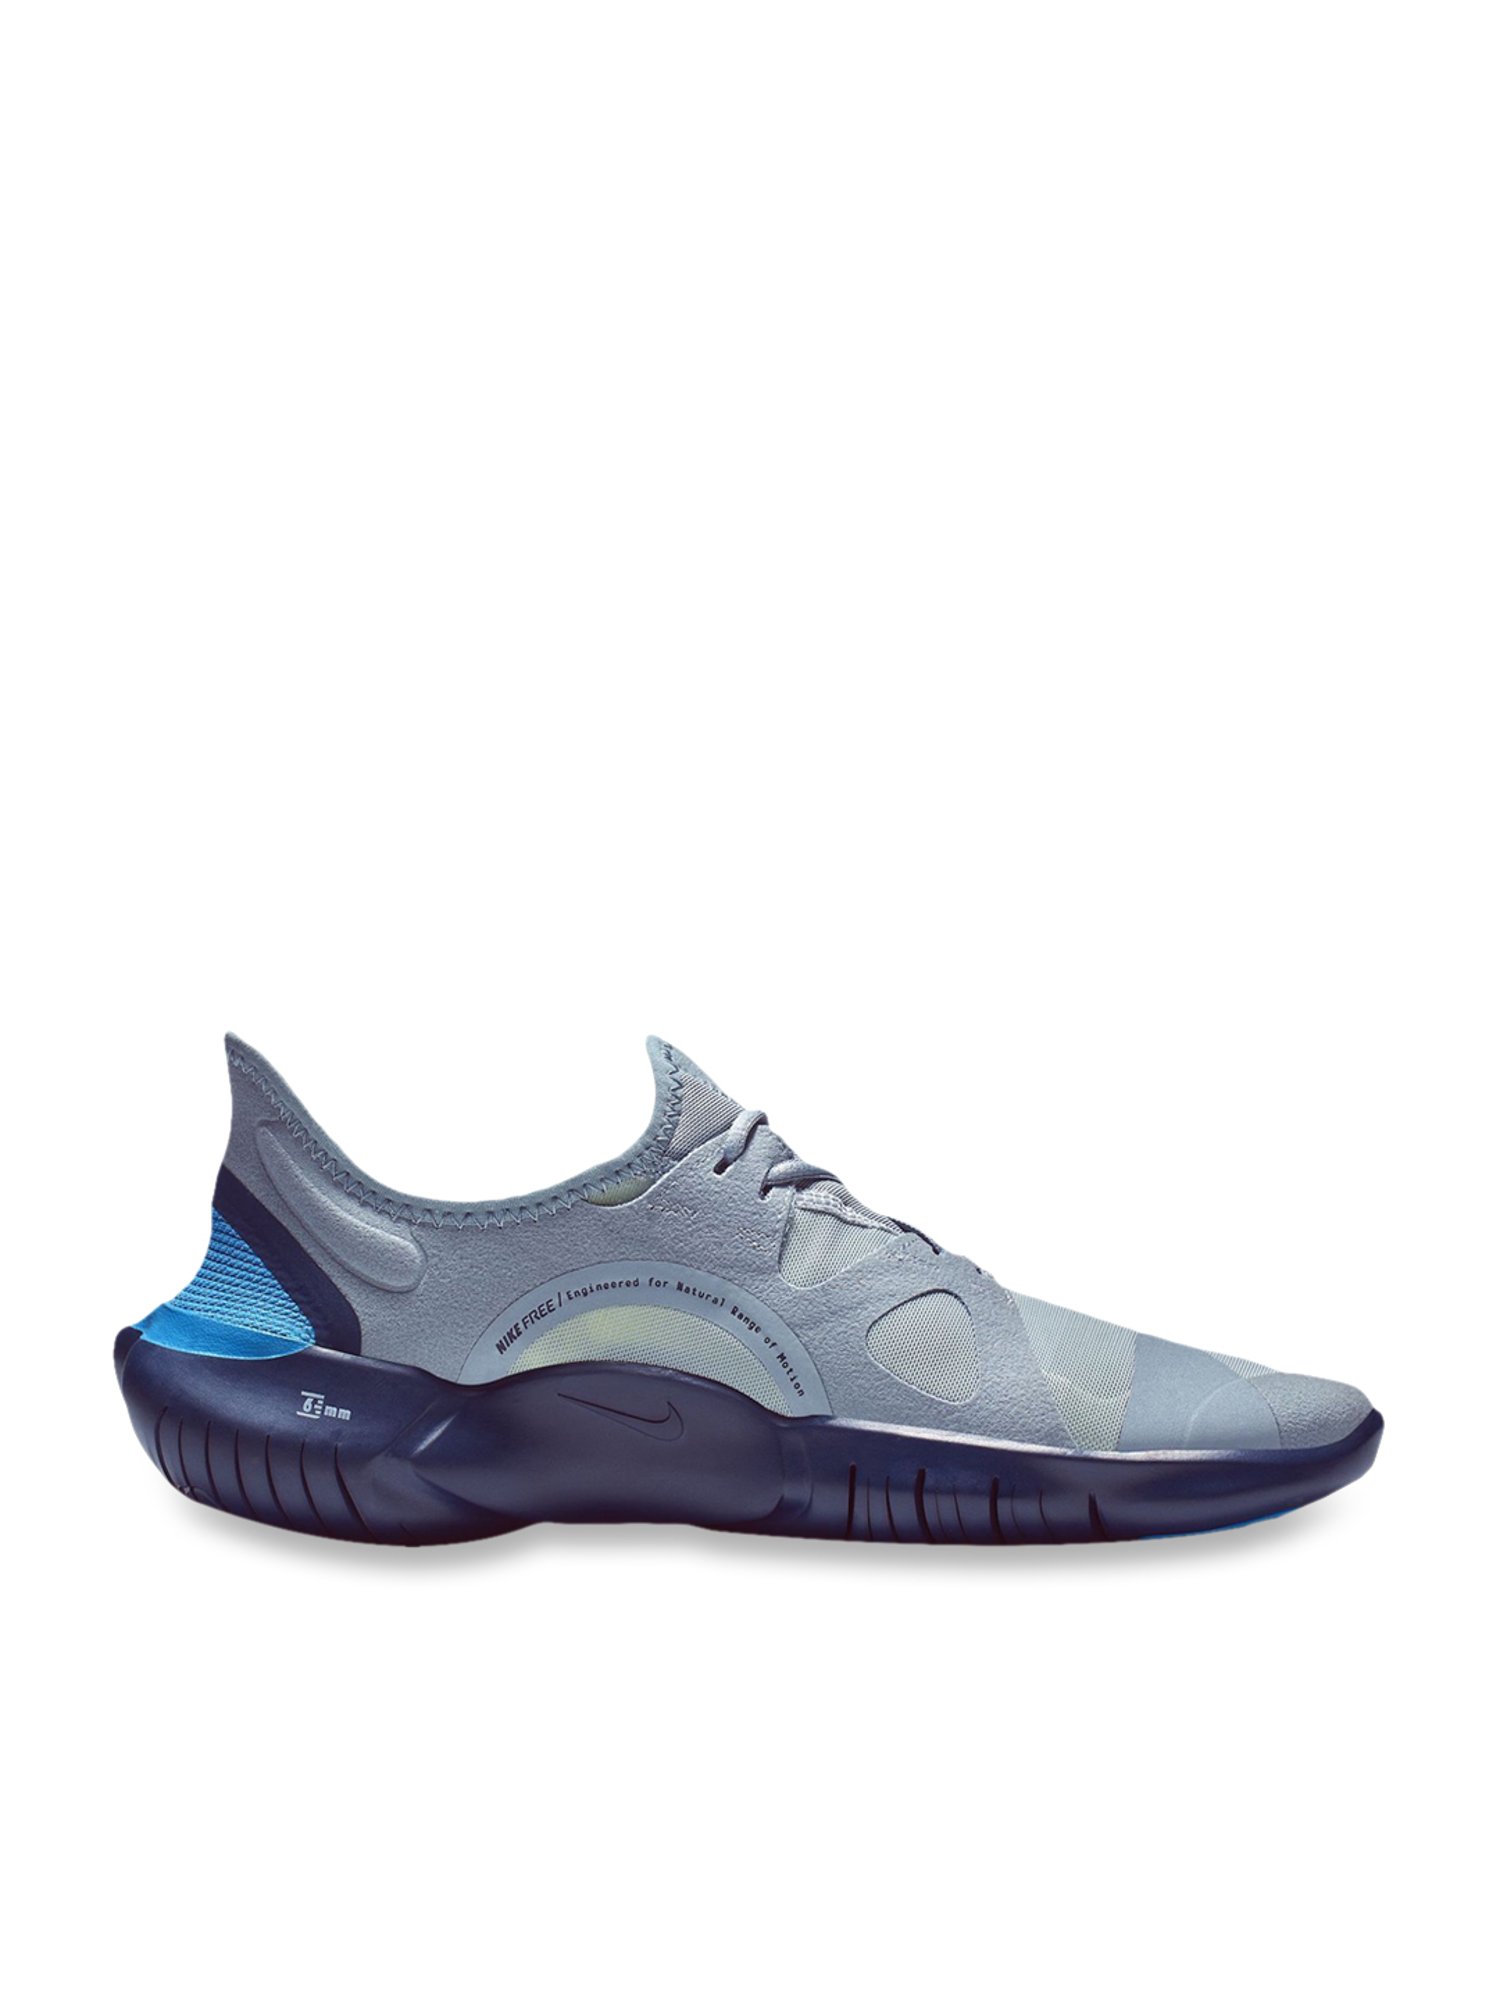 Buy Nike Free RN 5.0 Blue Running Shoes 